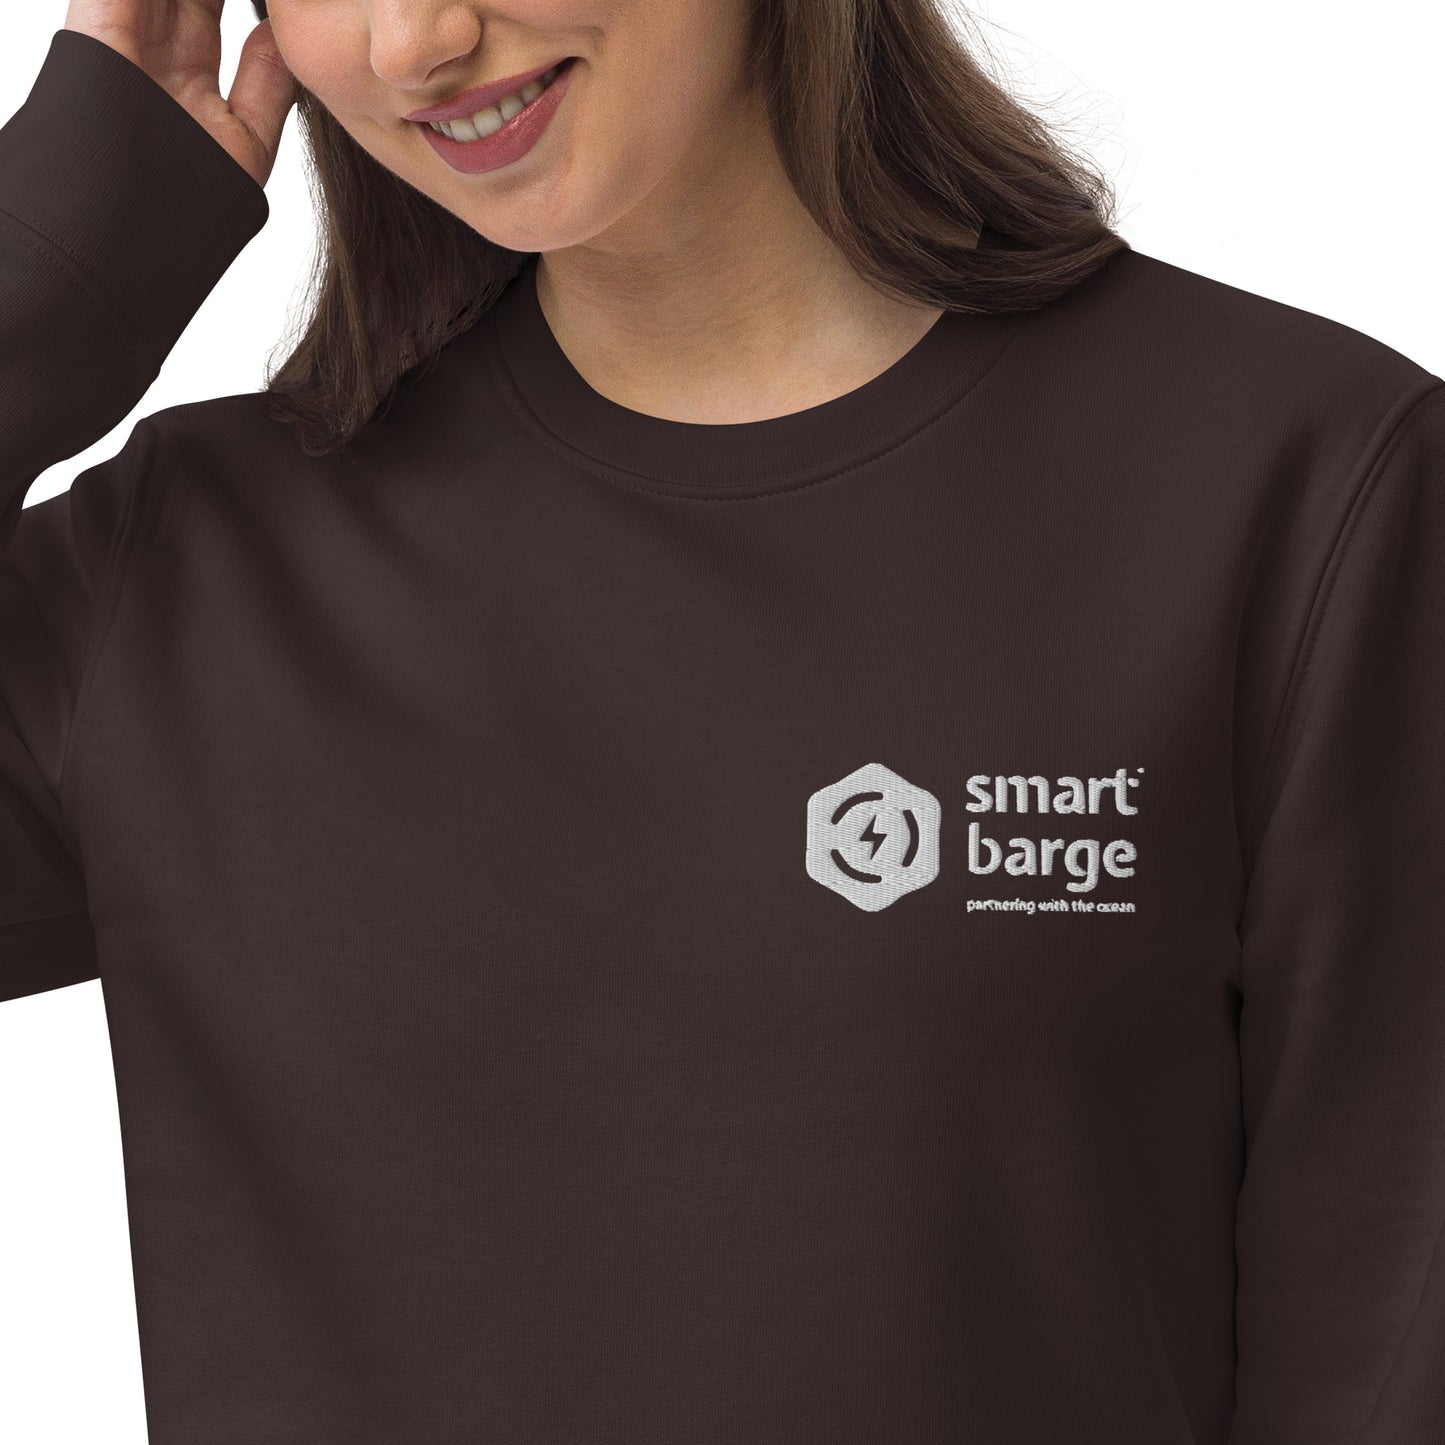 Smart Barge 'Partnering With The Ocean' Unisex Eco Sweatshirt